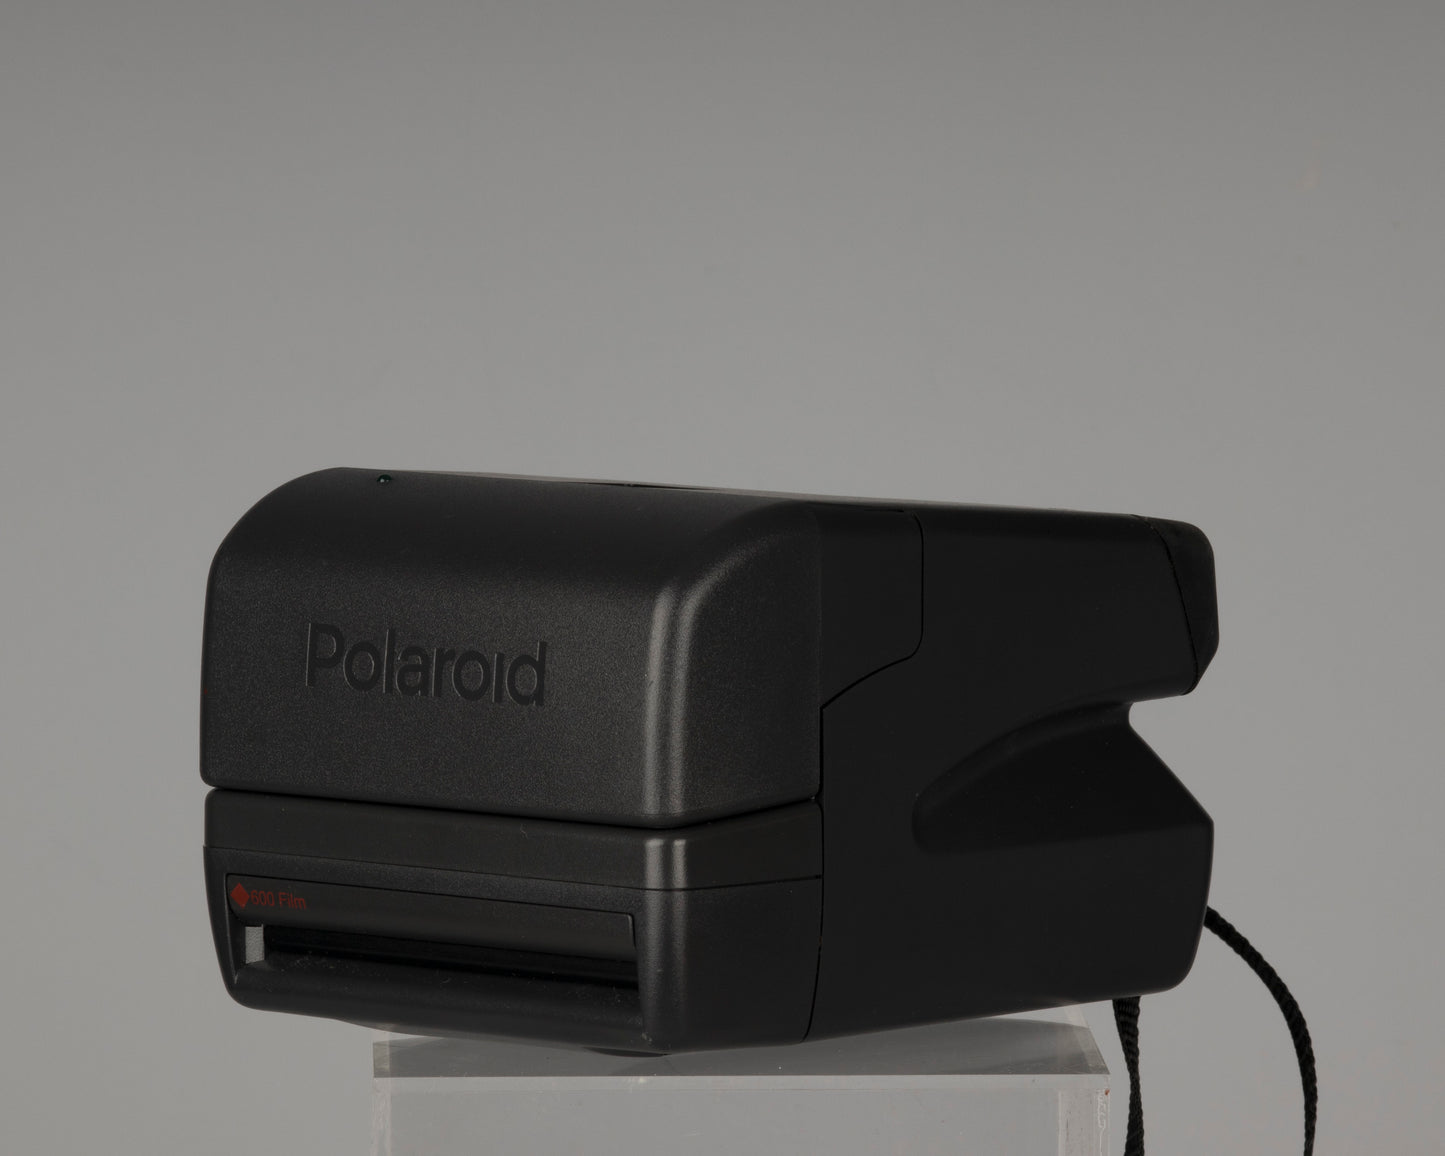 Polaroid One Step Close-up 600 instant camera